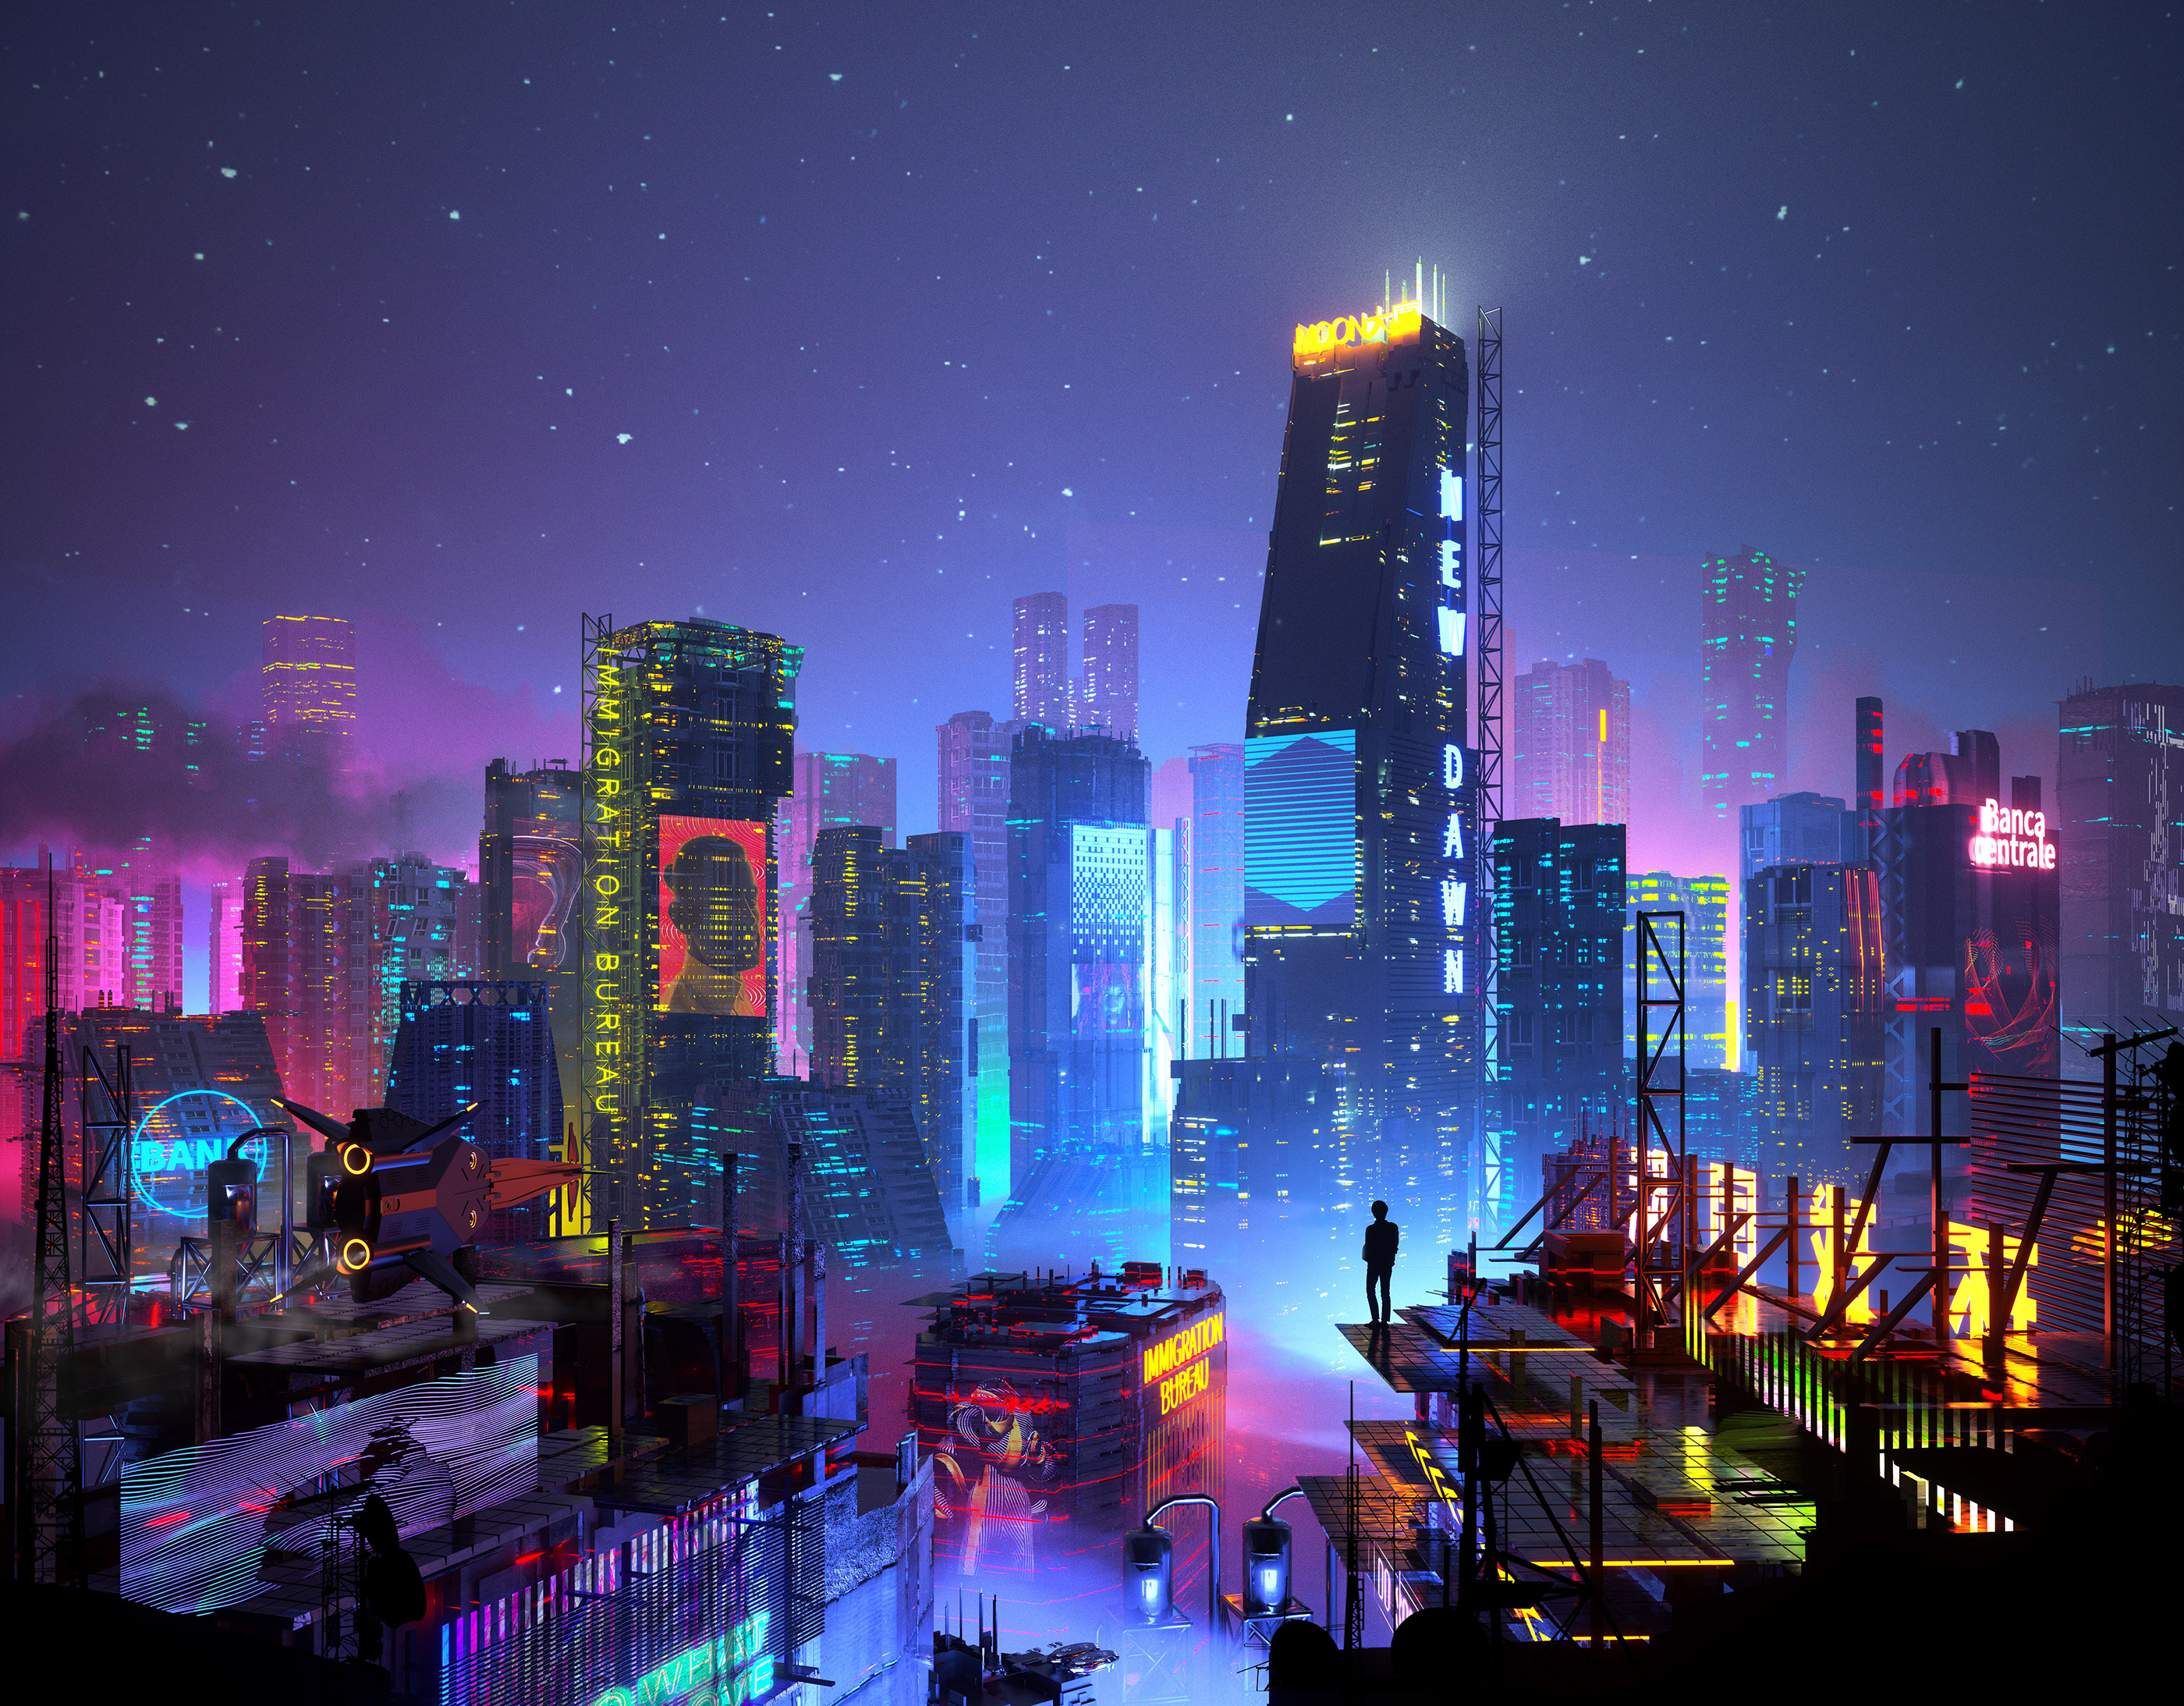 Digital Art Artwork Illustration City Cityscape Night Futuristic Futuristic City Cyberpunk Building  2800x2187